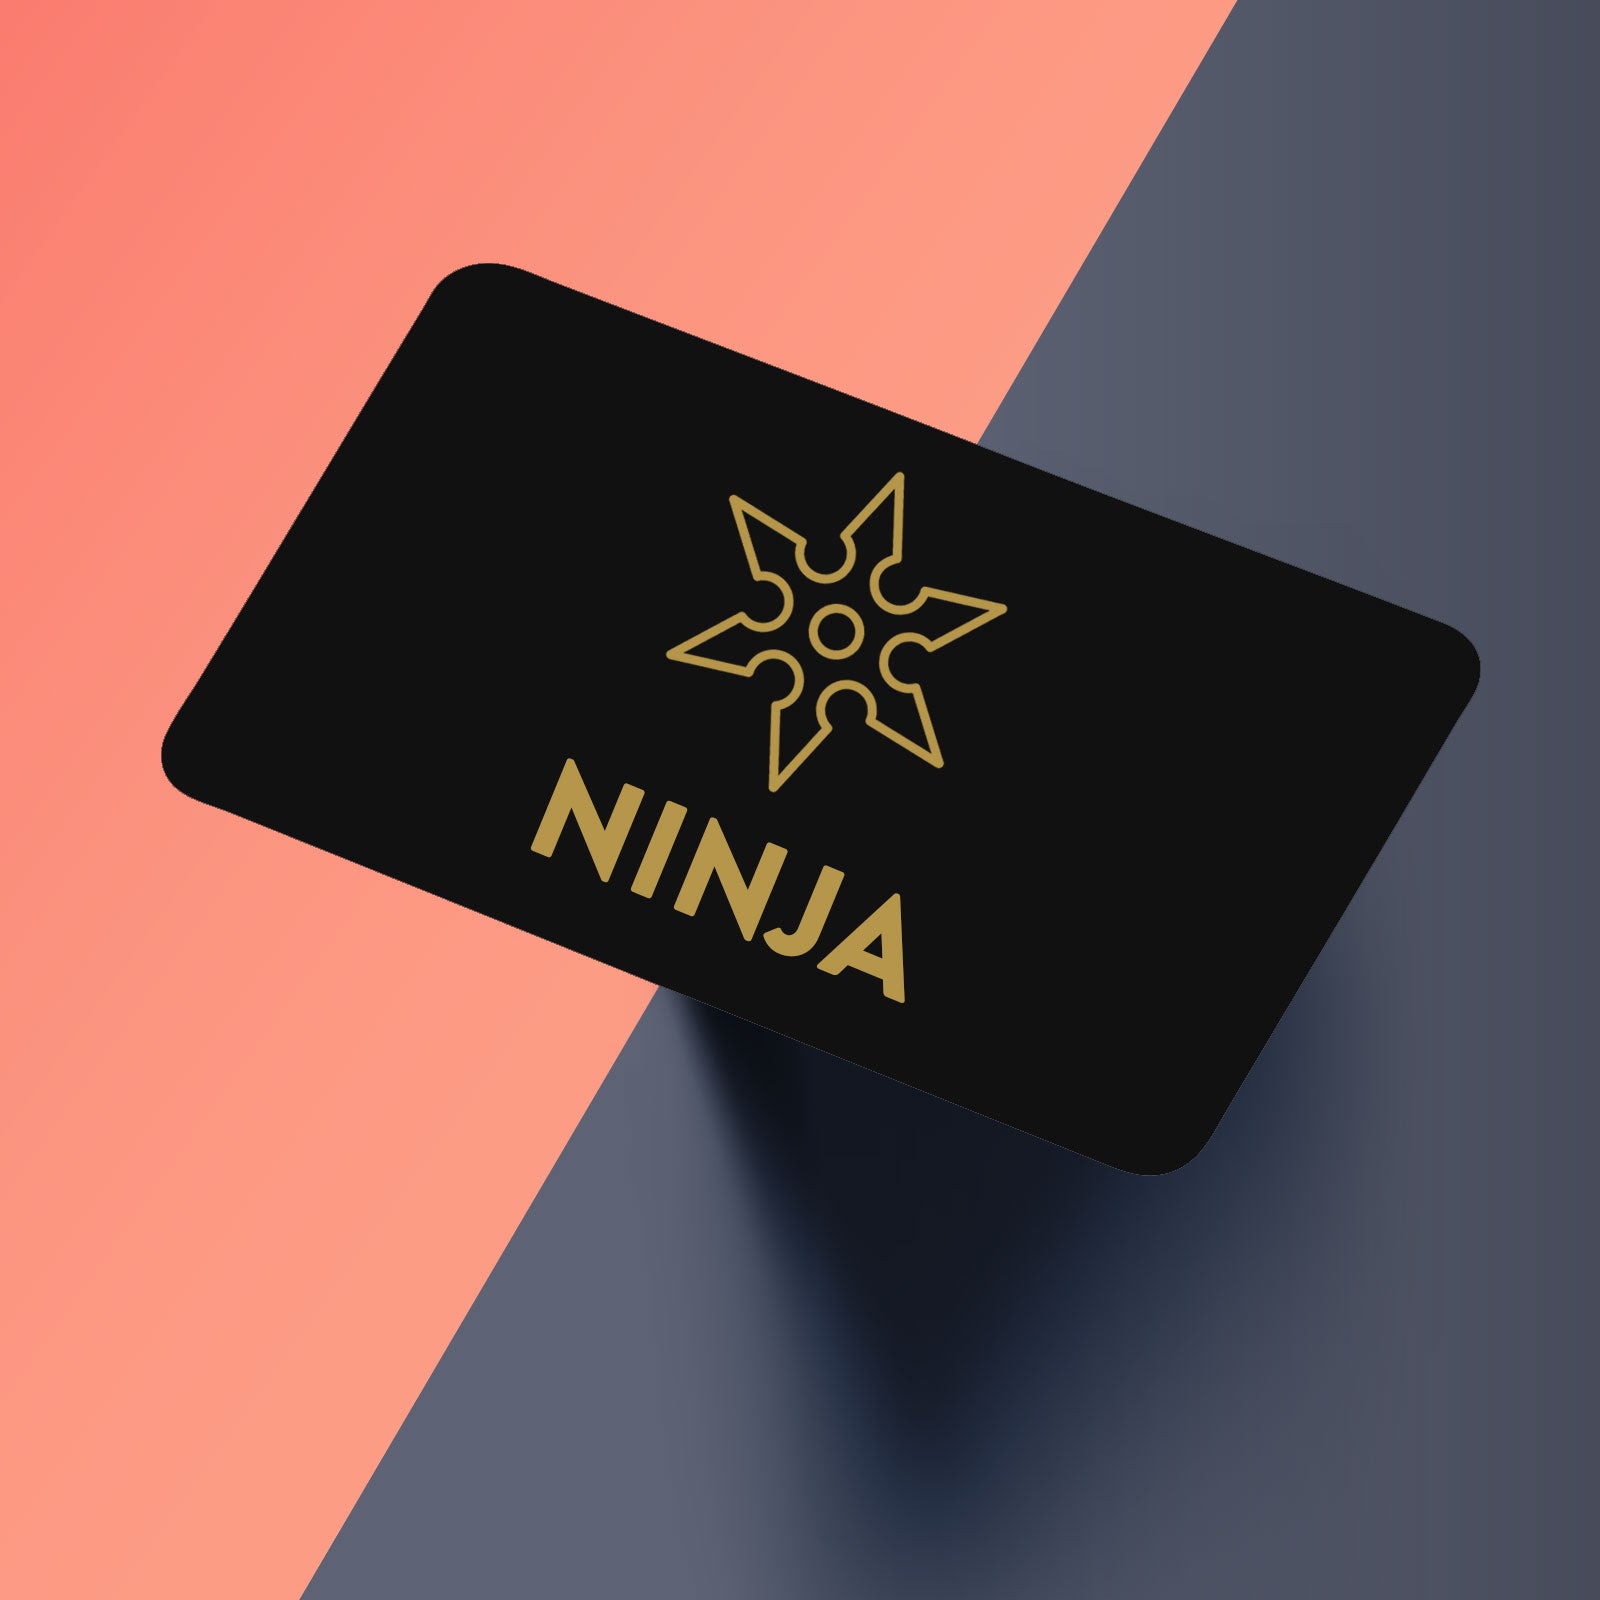 Ninja gift logo template. Gift store logo design. Combined the